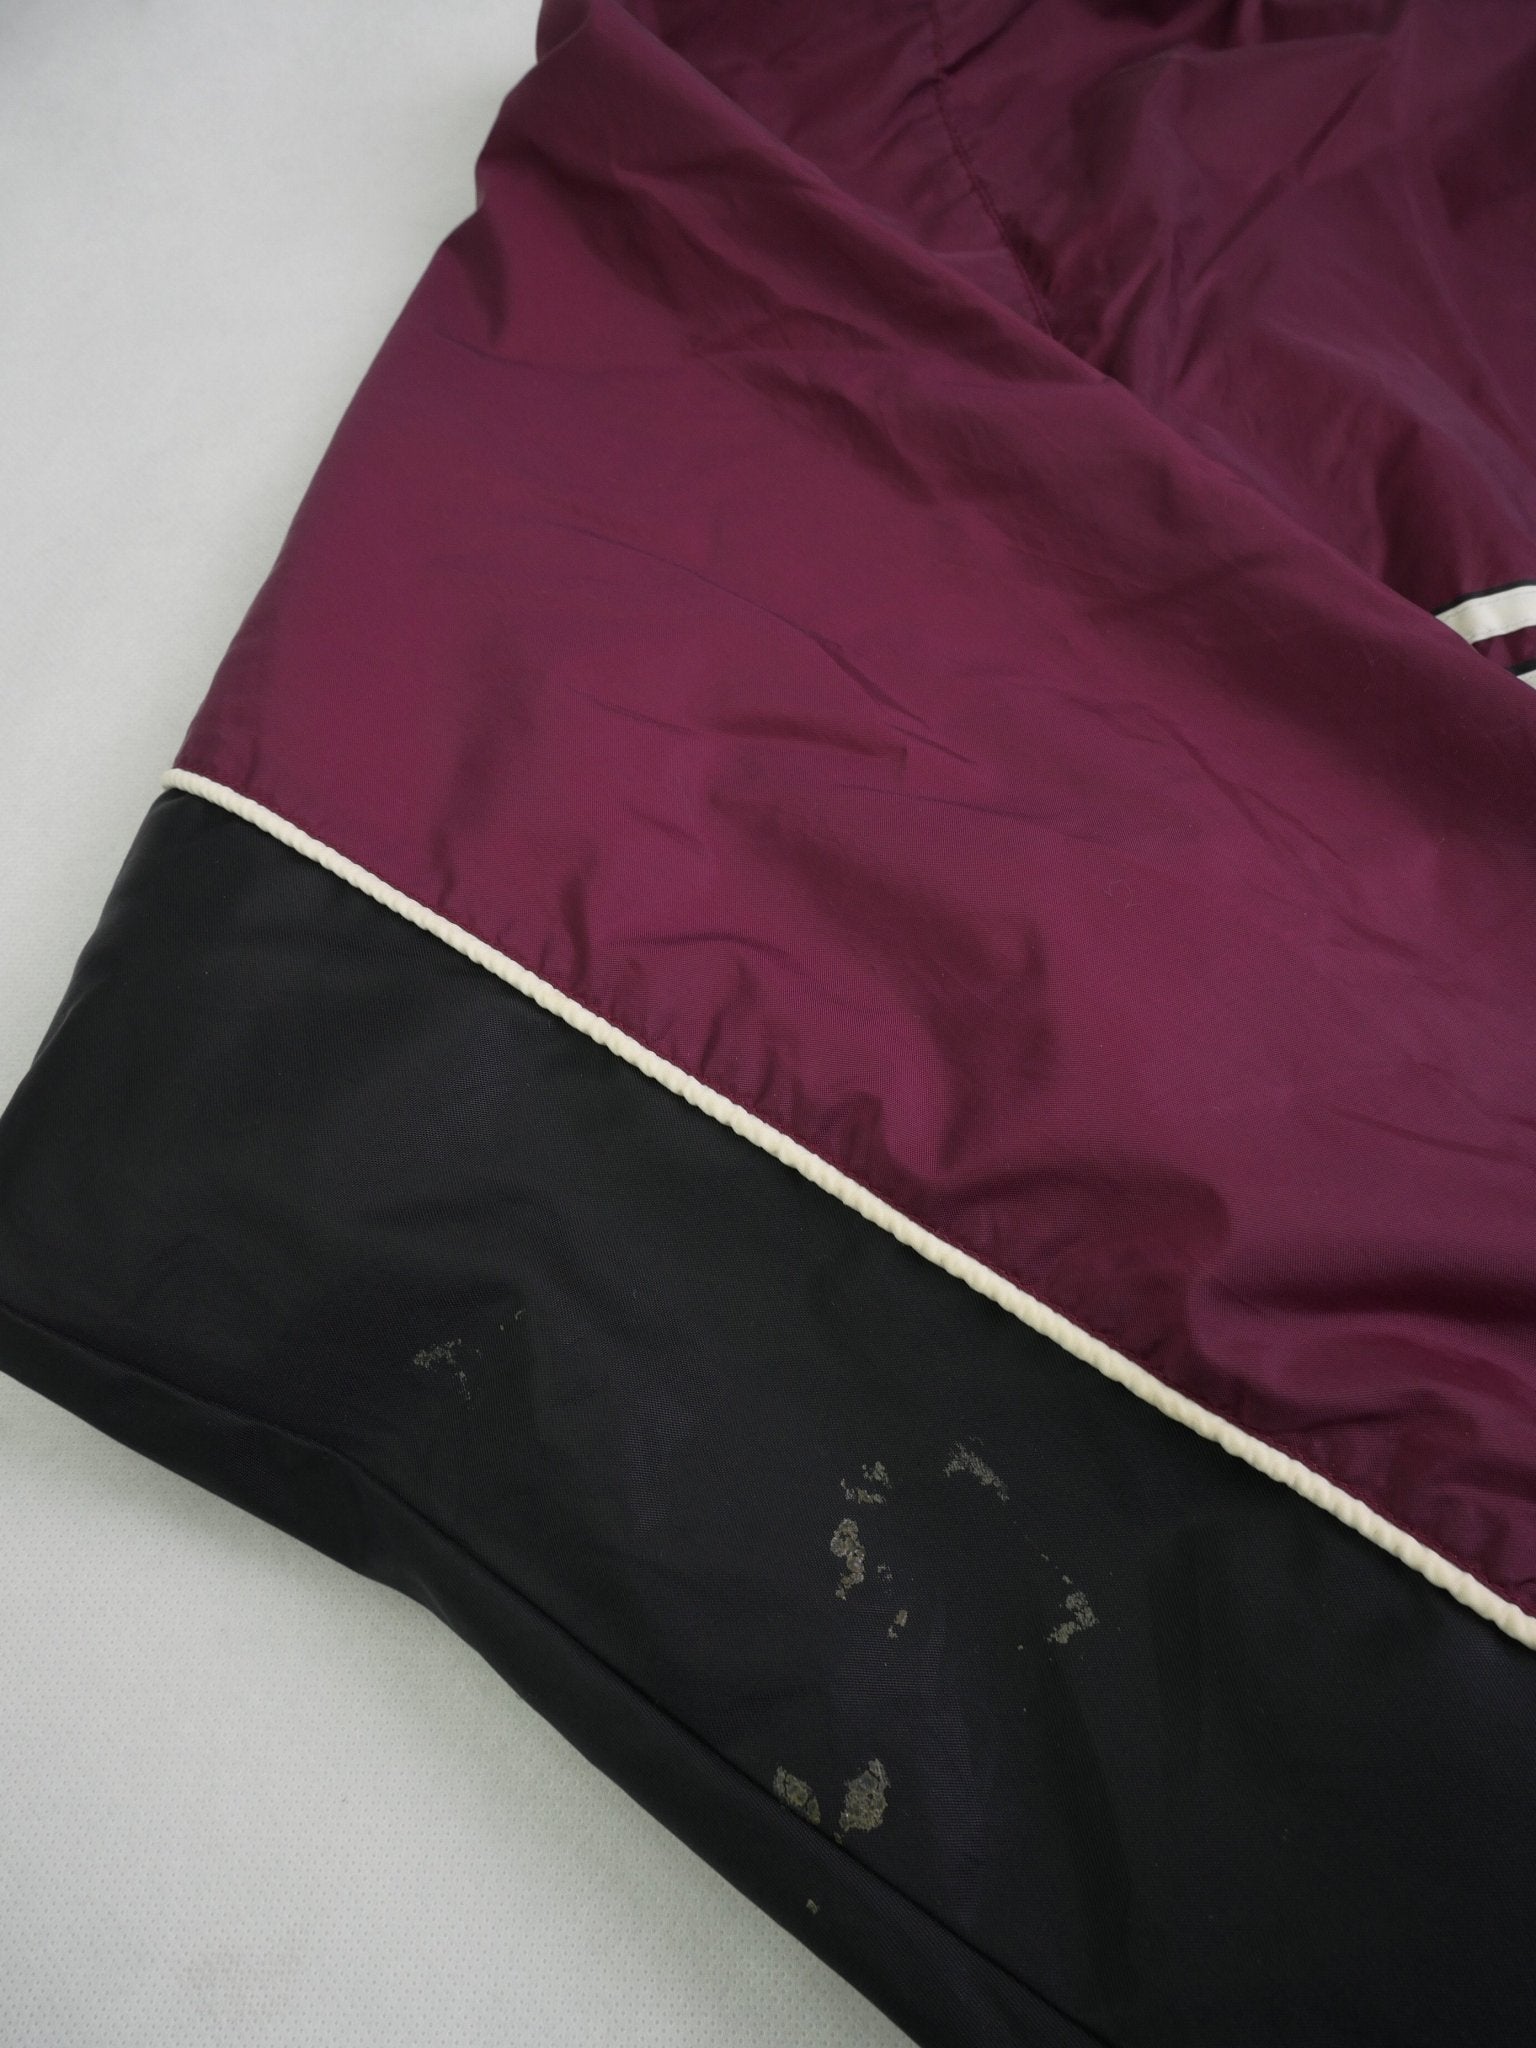 adidas embroidered Logo & Stripes burgundy Track Jacket - Peeces